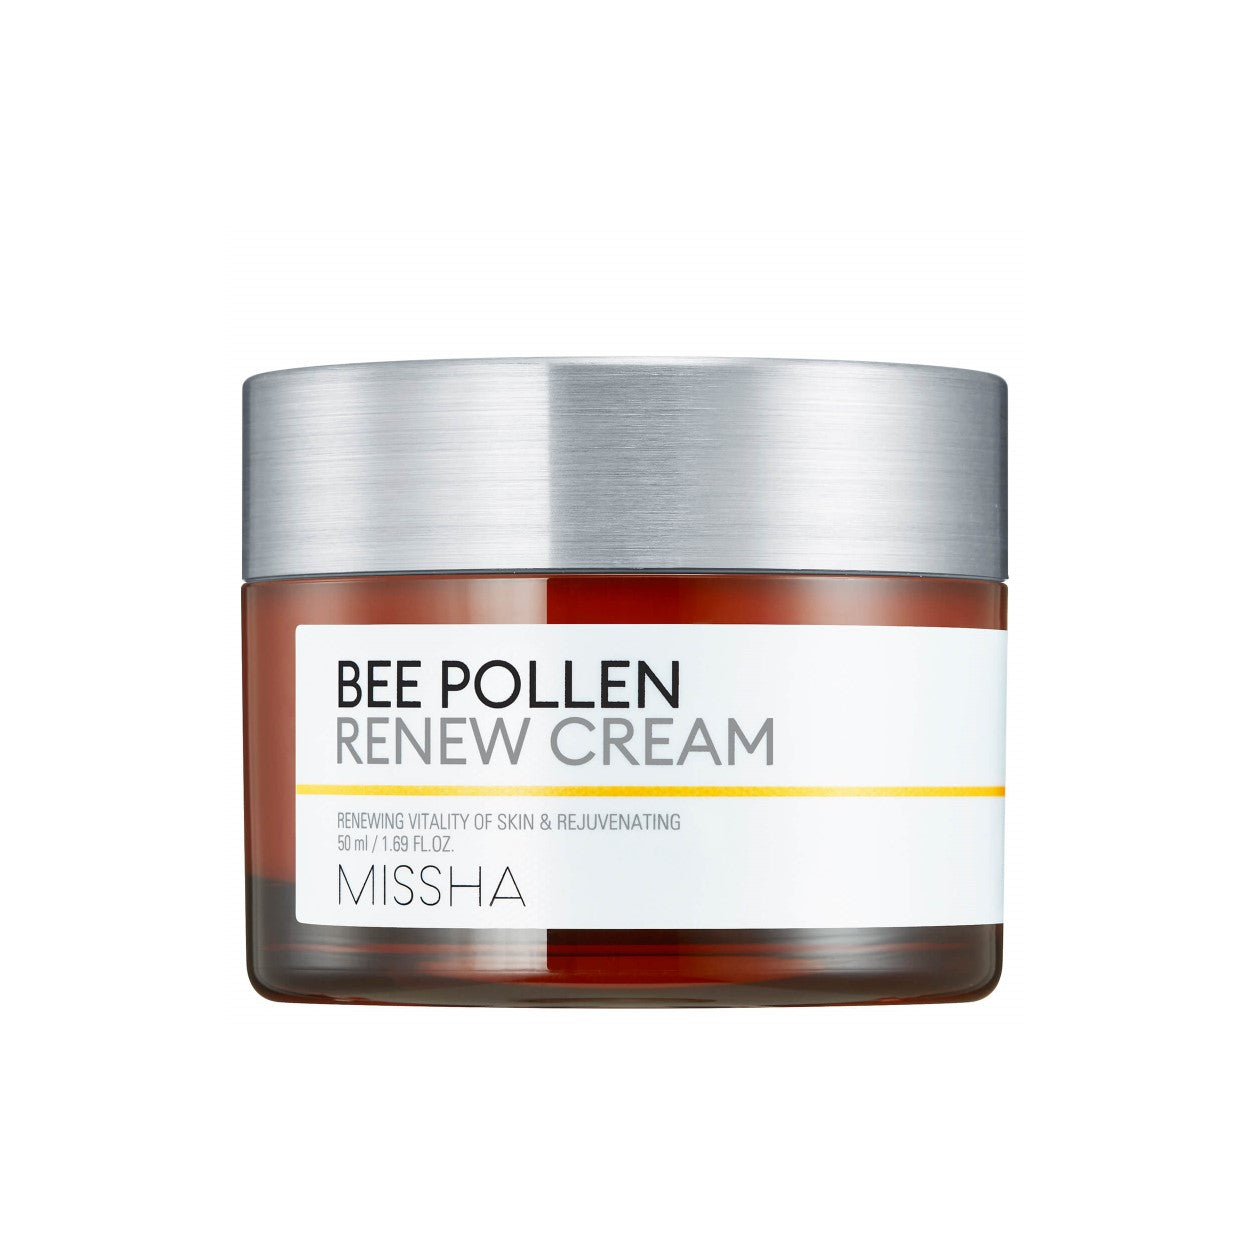 Missha Bee Pollen Renew Cream - Korean-Skincare